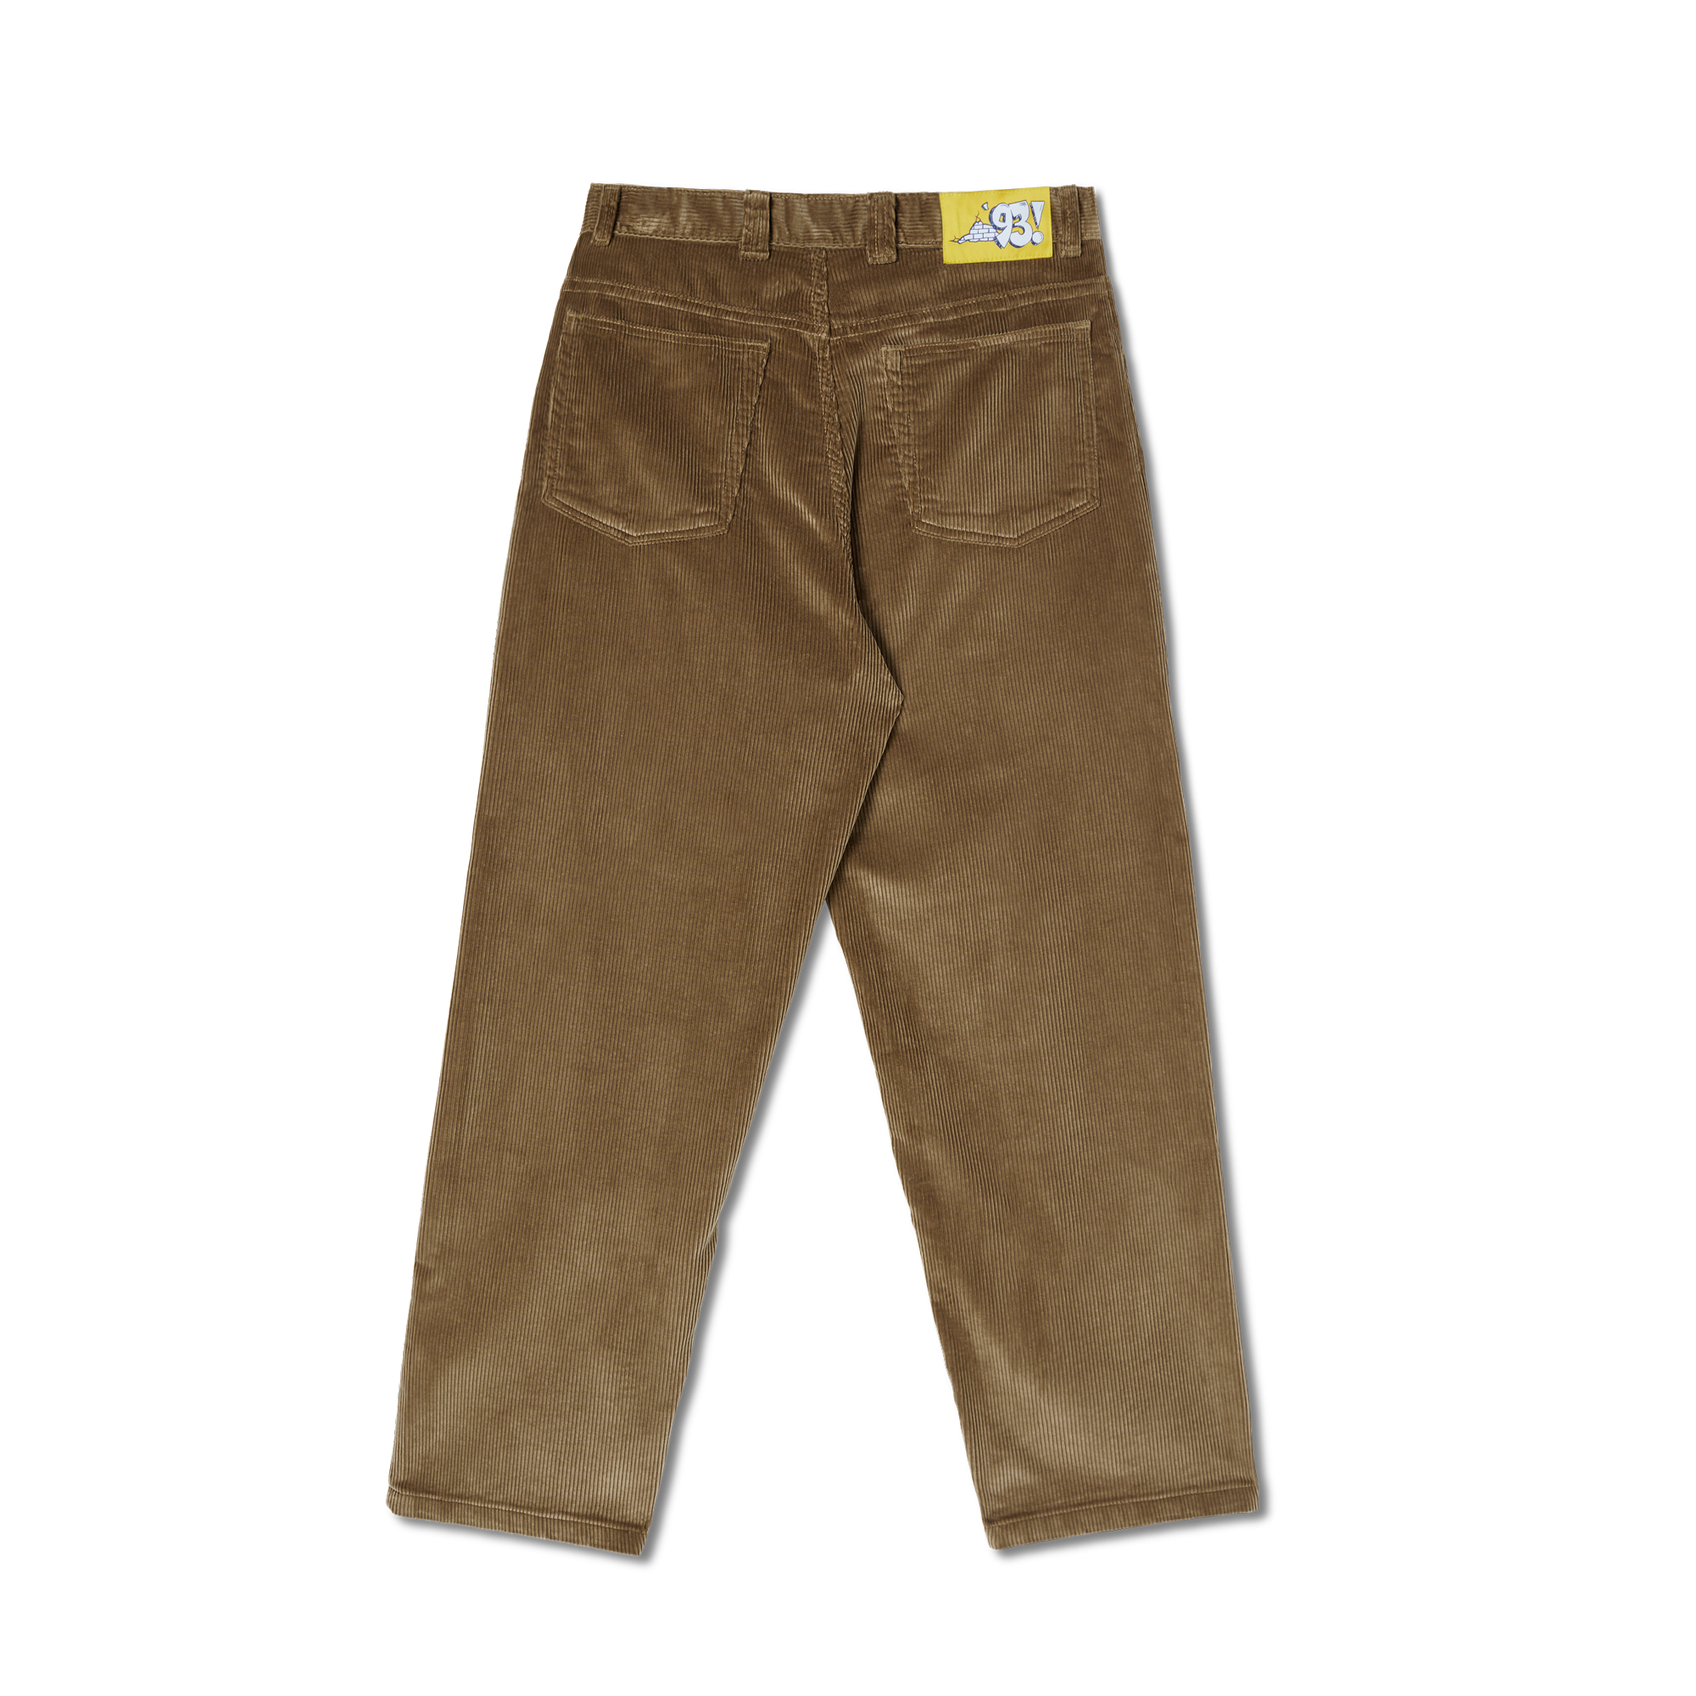 Polar Skate Co. '93! Cord Pants (Brass) - Apple Valley Emporium